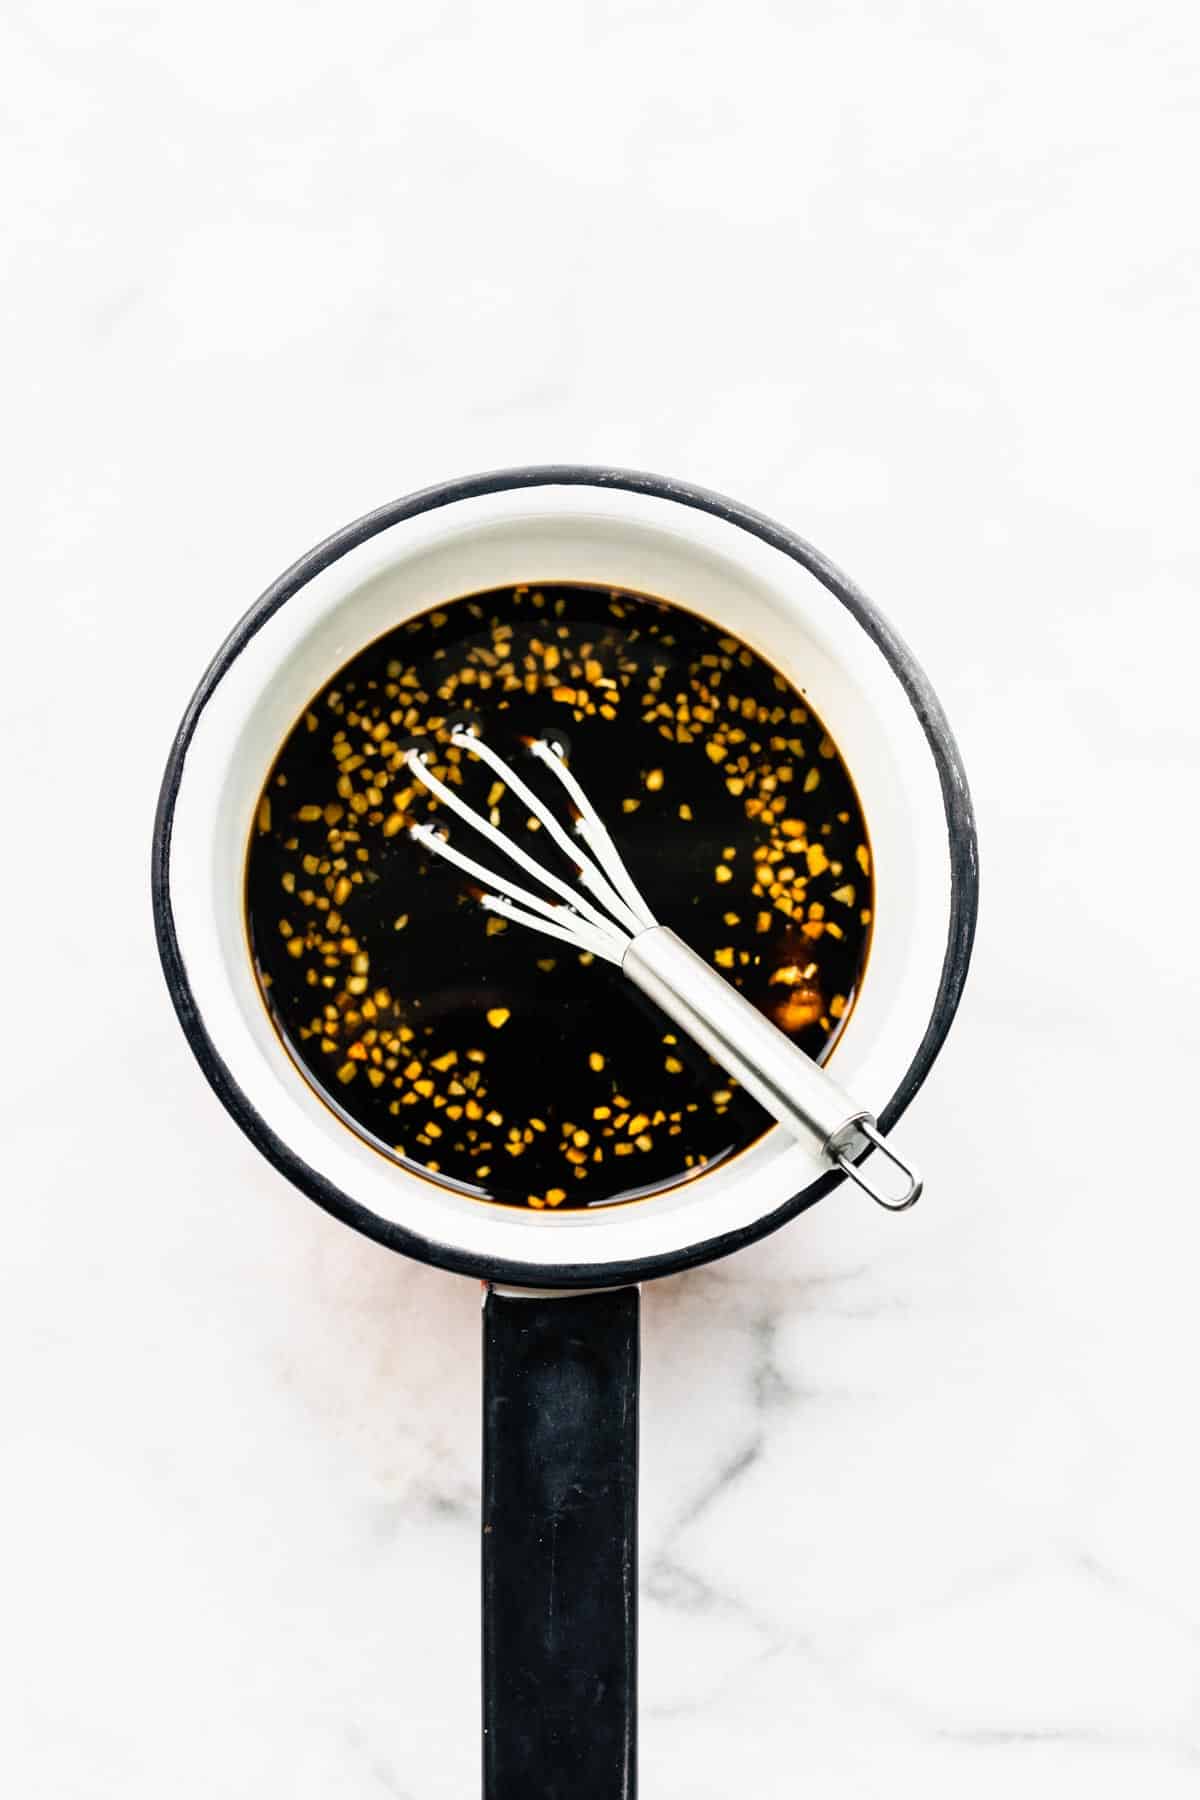 Overhead photo of a whisk stirring homemade teriyaki sauce in a white saucepan.